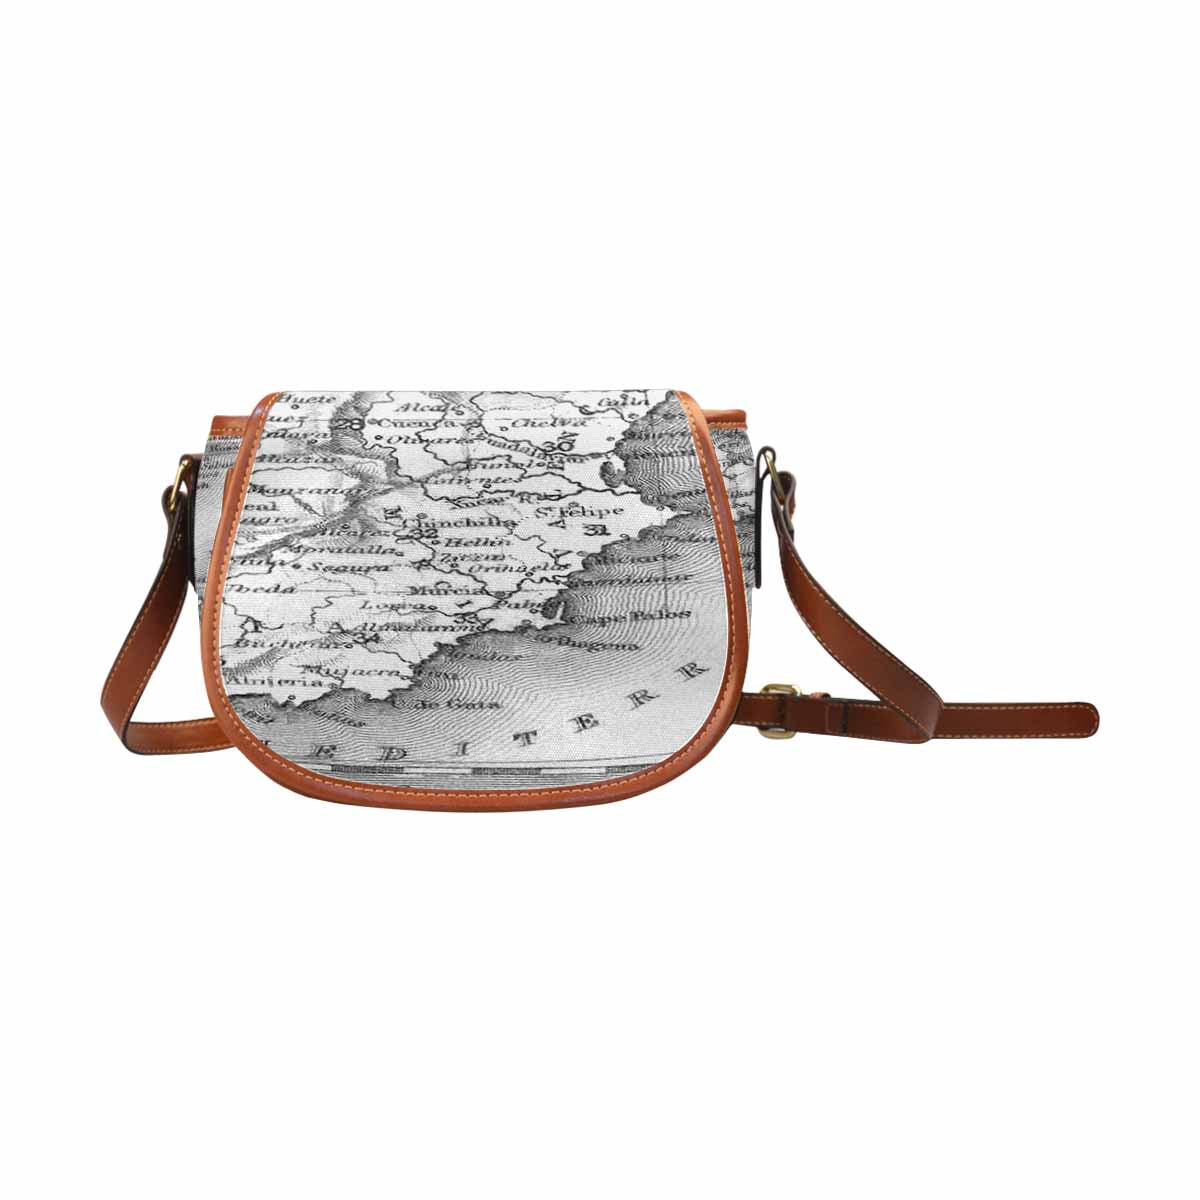 Antique Map design Handbag, saddle bag, Design 14